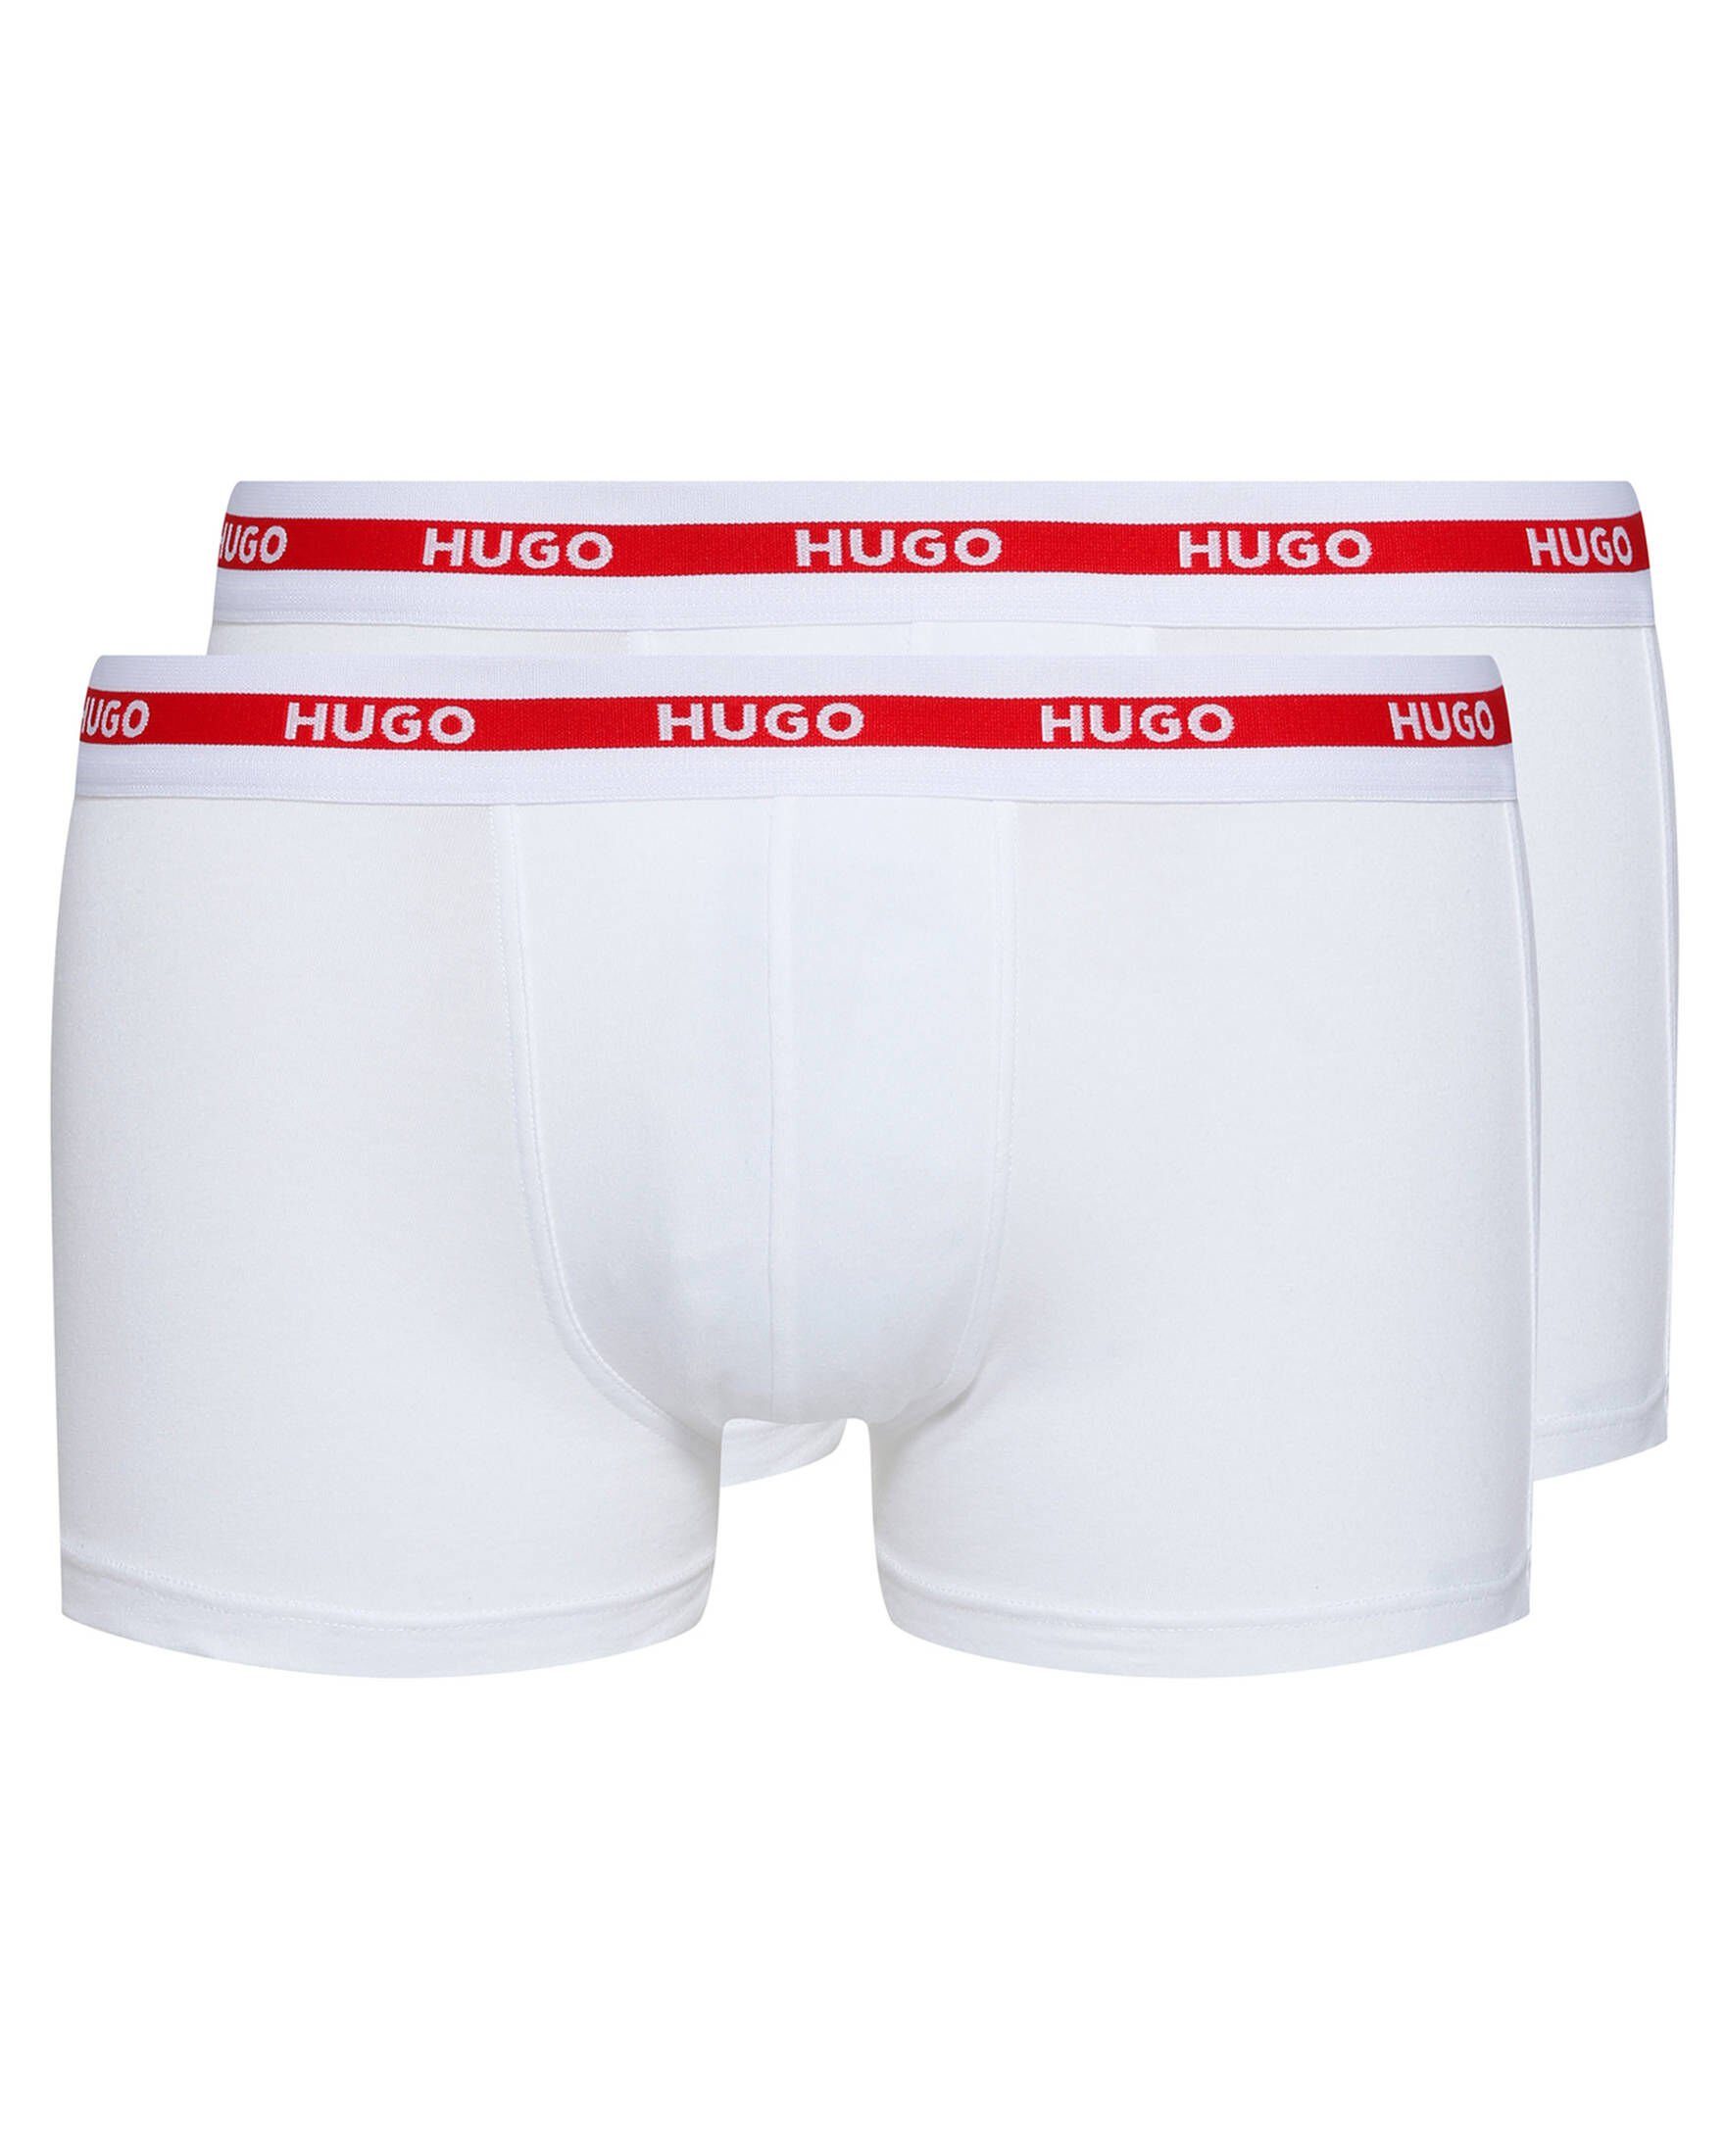 Pants TWIN Herren (3-St) (10) weiss Retropants HUGO TRUNK Retro 2er-Set PACK